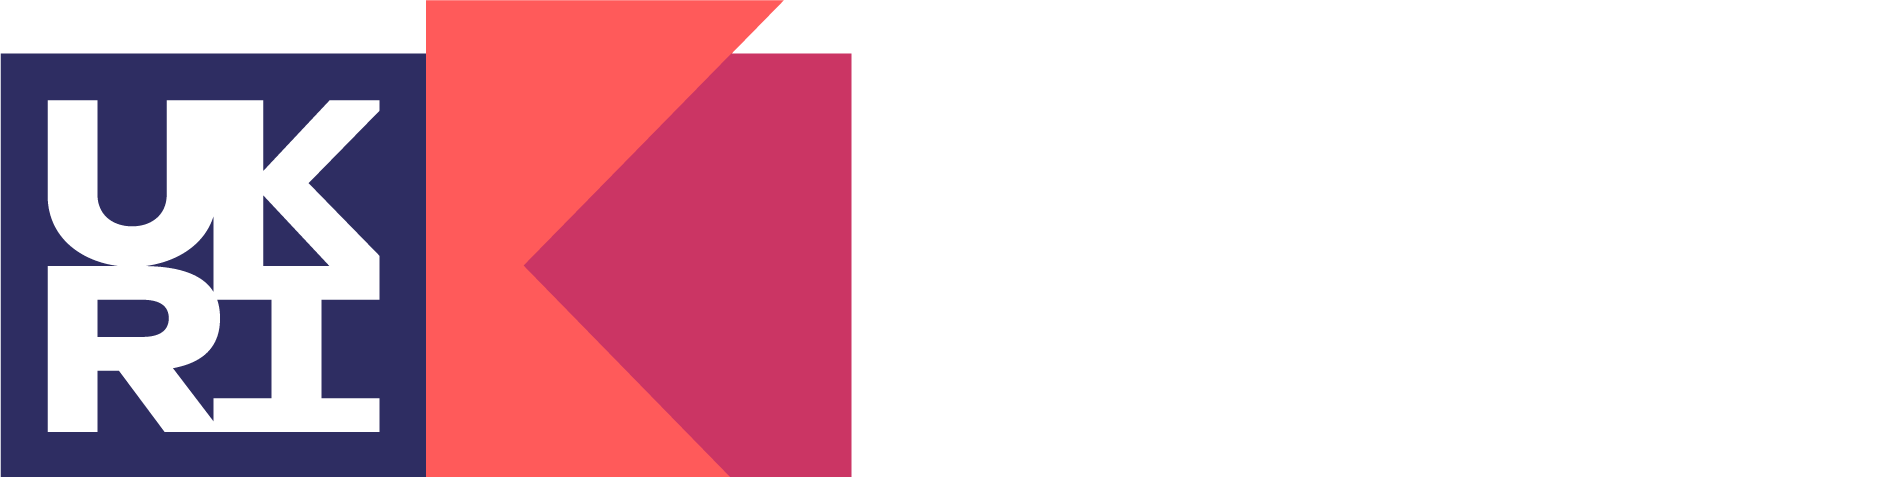 UK Research & Innovation